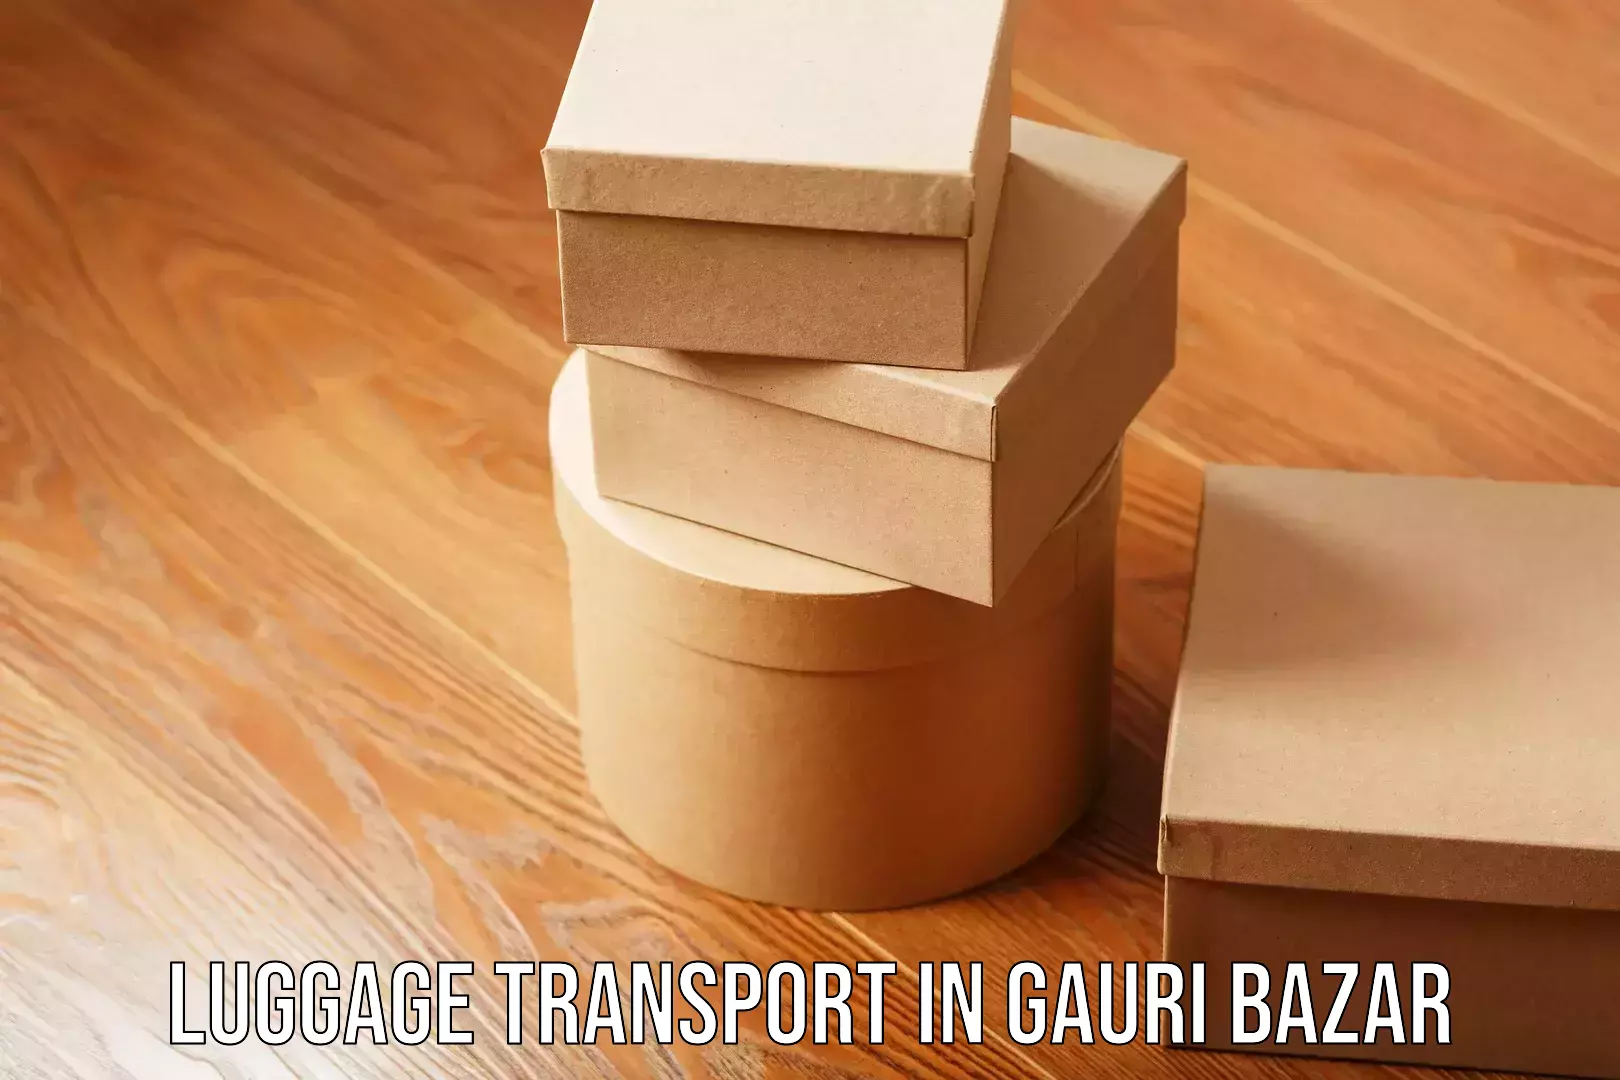 Fast track baggage delivery in Gauri Bazar